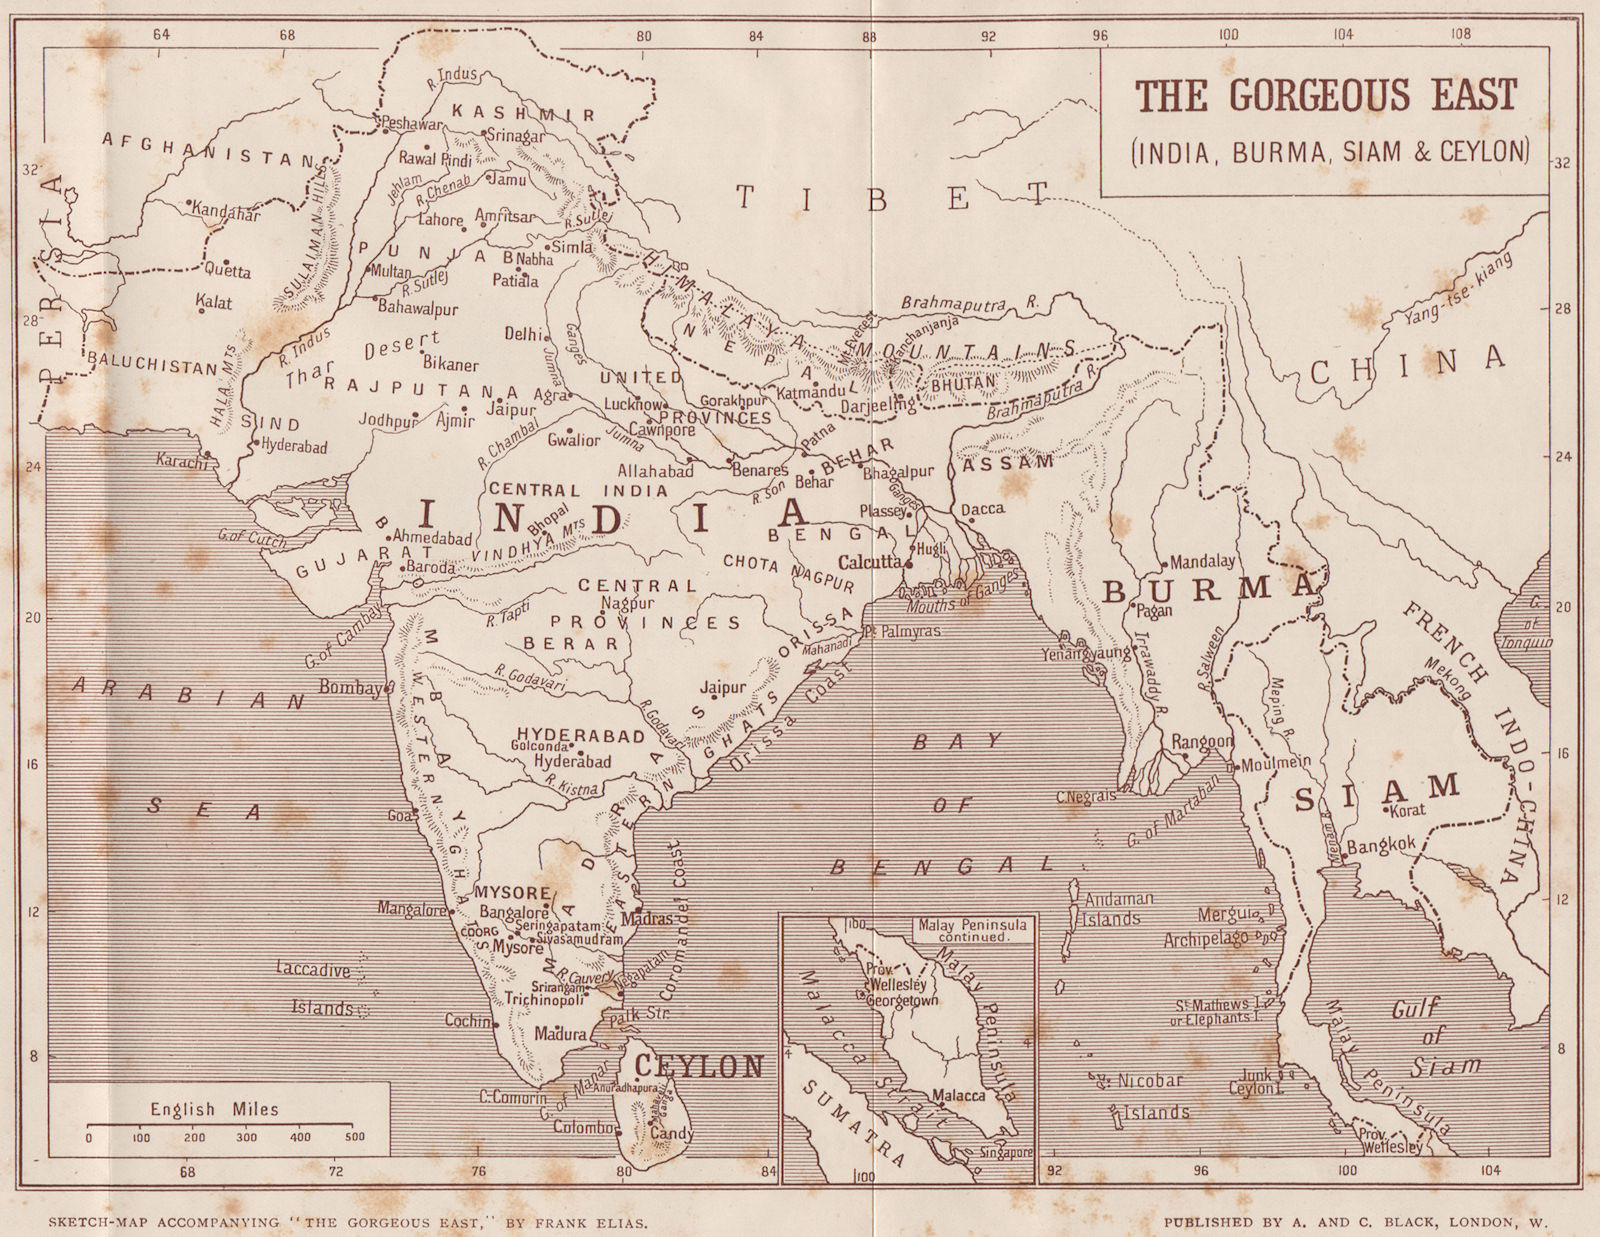 Associate Product 'The Gorgeous East'. India, Burma, Siam, Malaya & Ceylon. Indochina 1913 map